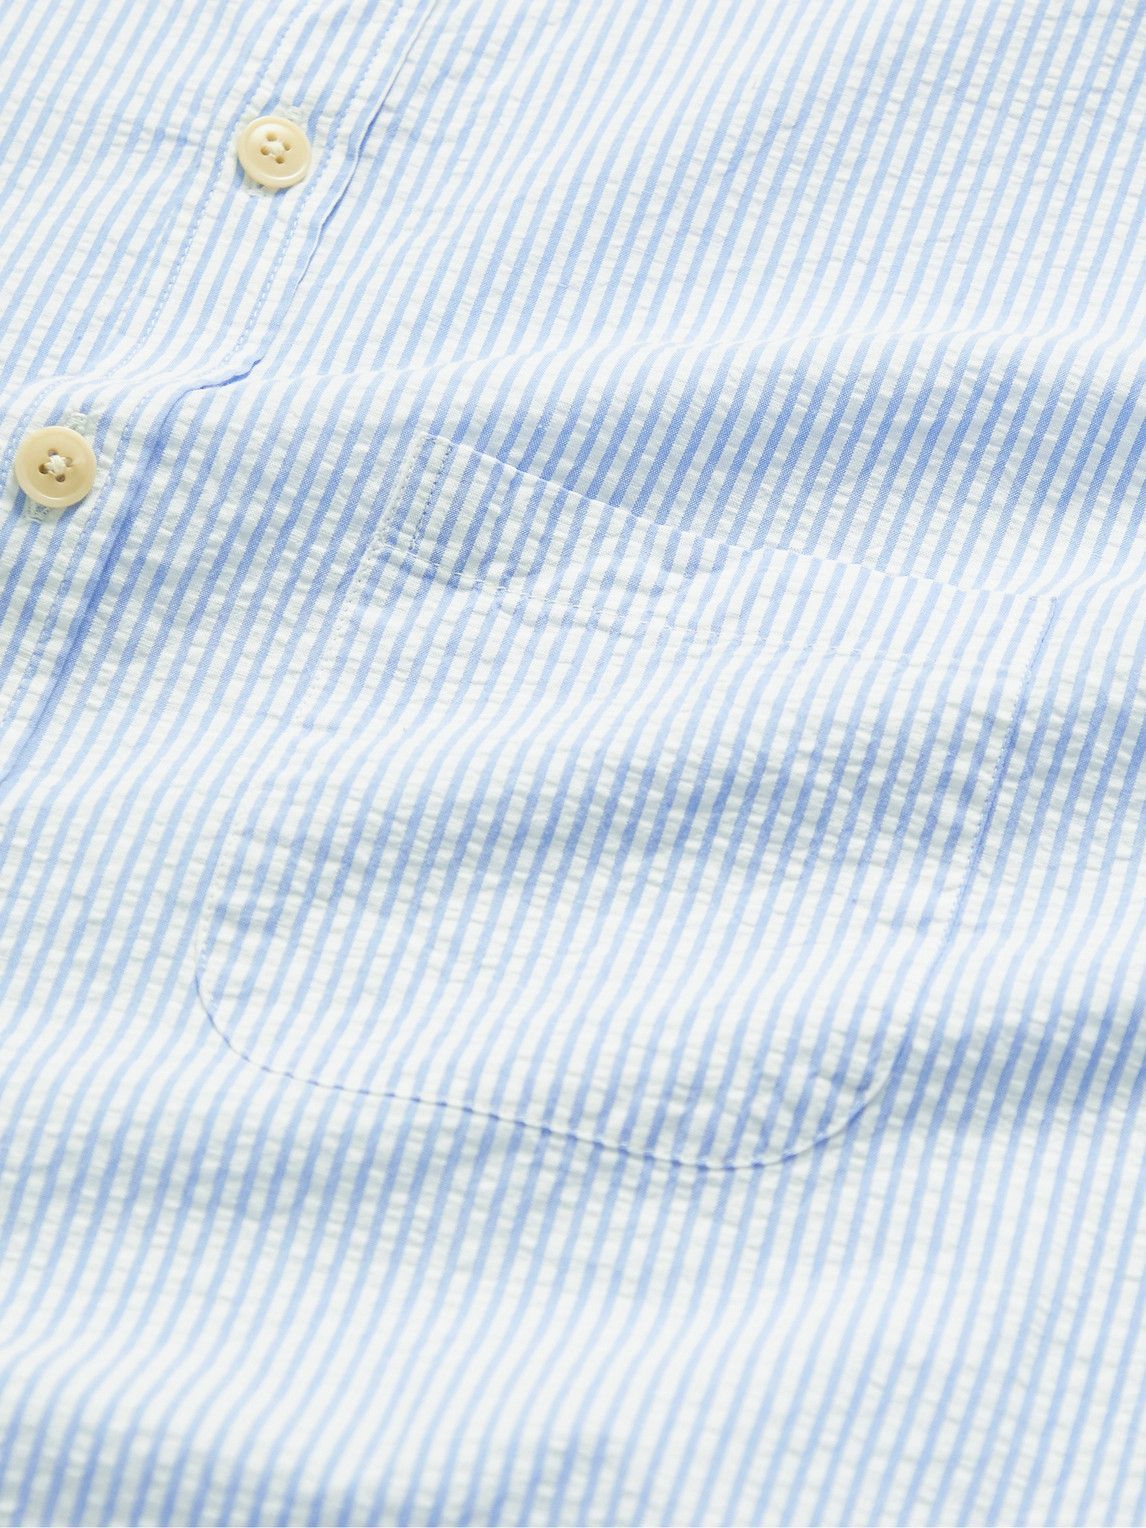 Oliver Spencer - Grandad-Collar Striped Cotton-Seersucker Shirt - Blue